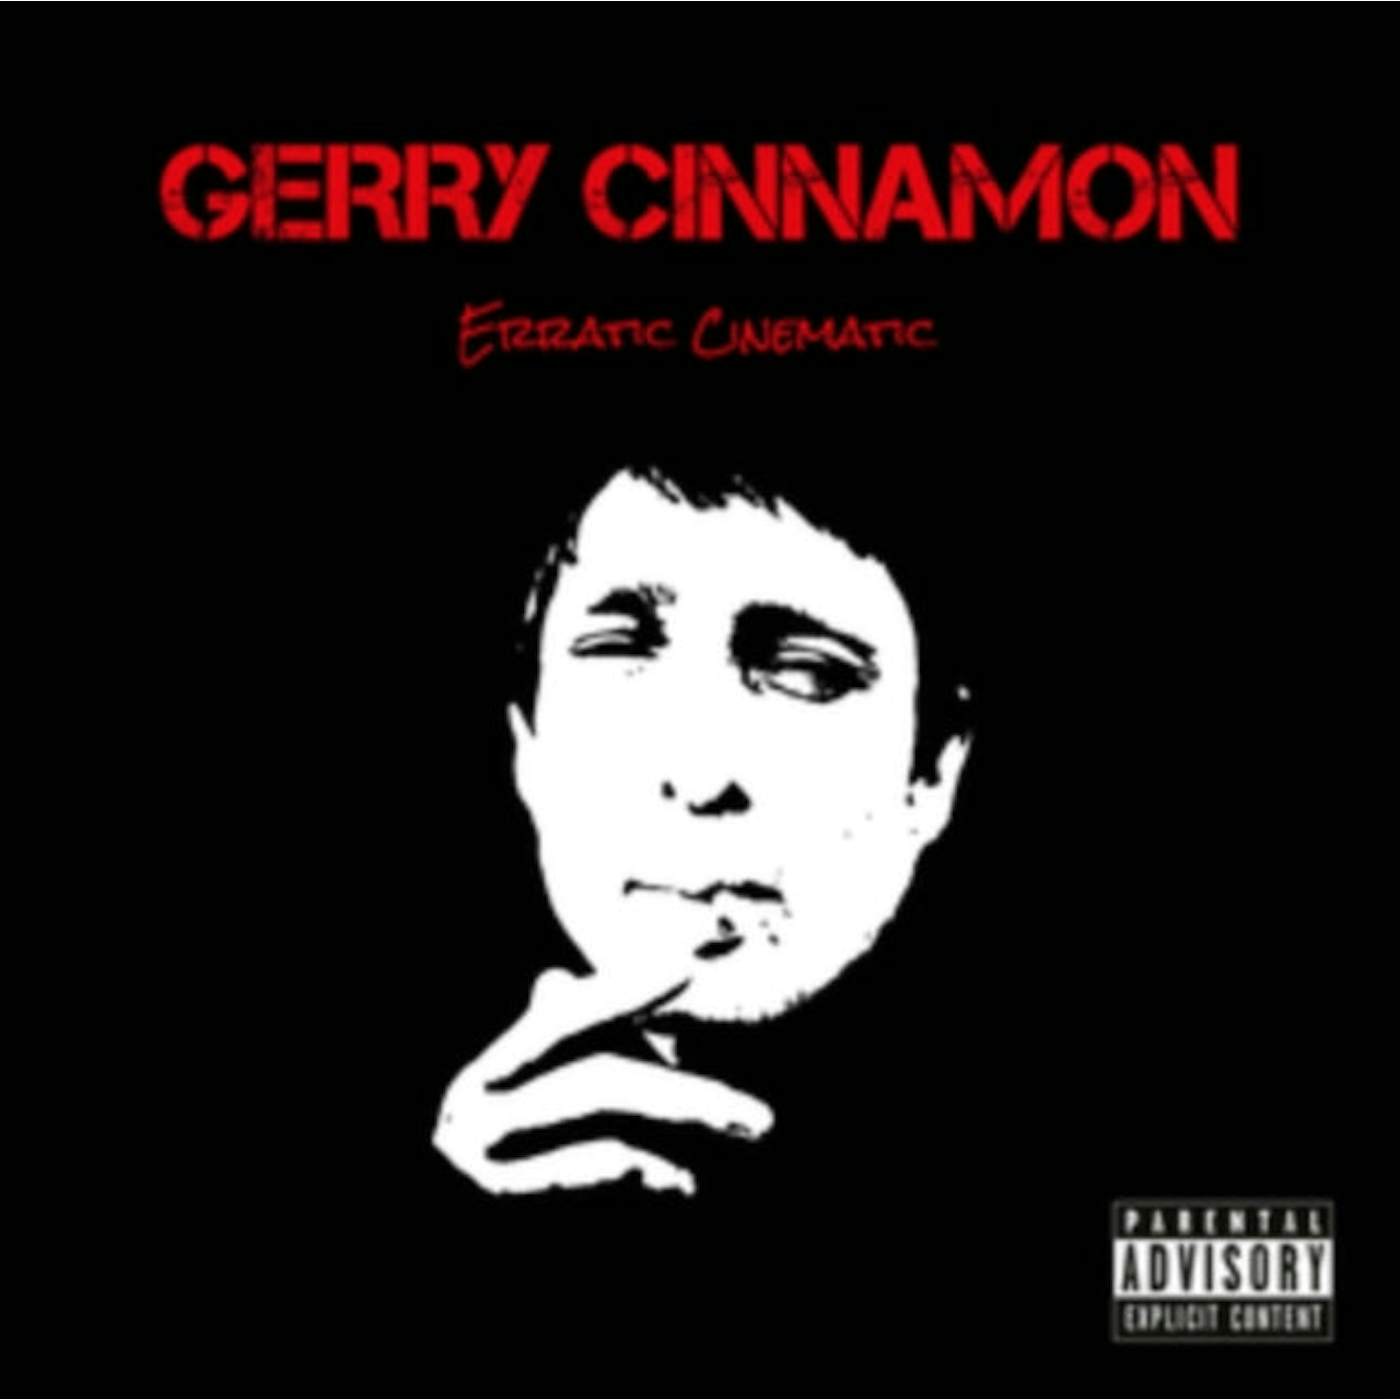 Gerry Cinnamon LP Vinyl Record - Erratic Cinematic